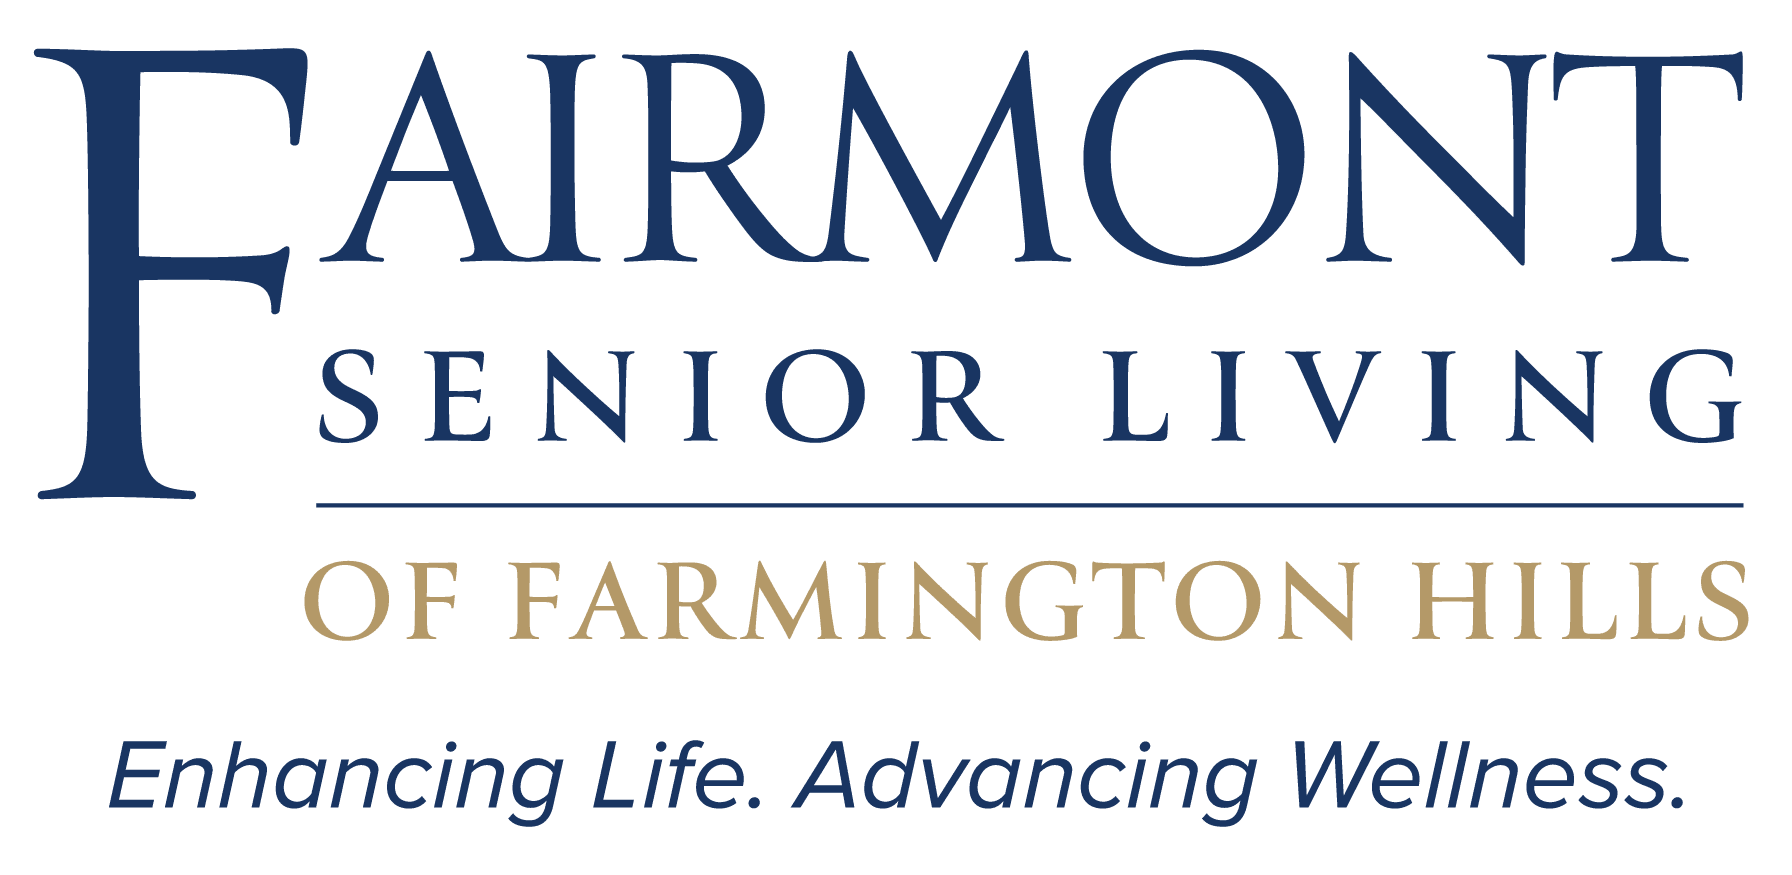 fairmont-farmington-hills-ELAW